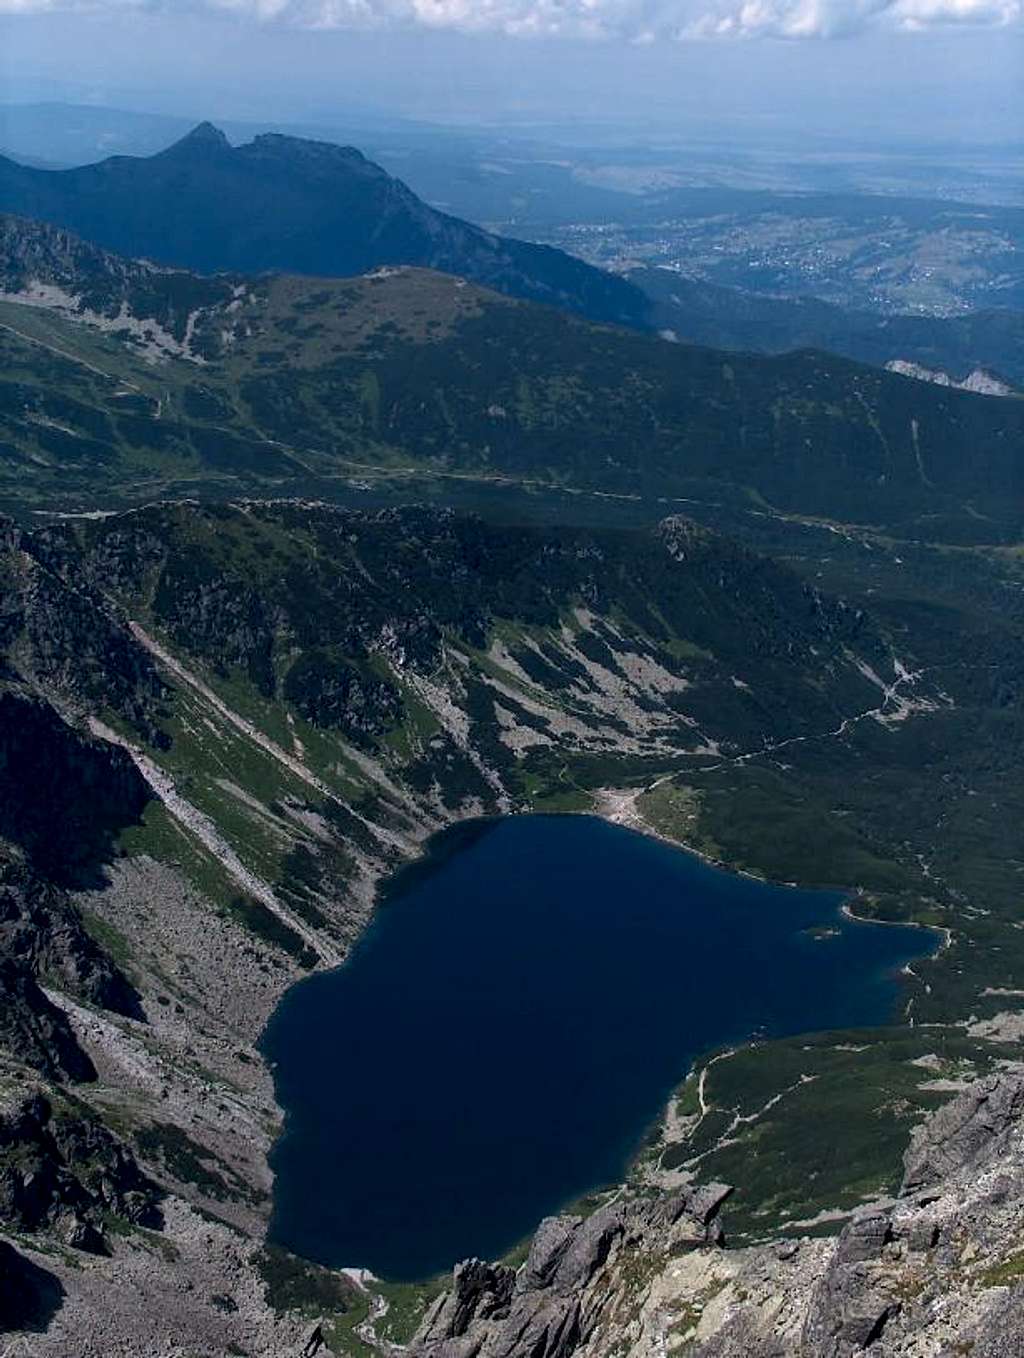 From Orla Perć, looking down lake Czarny Staw Gąsienicowy, and peak Giewont